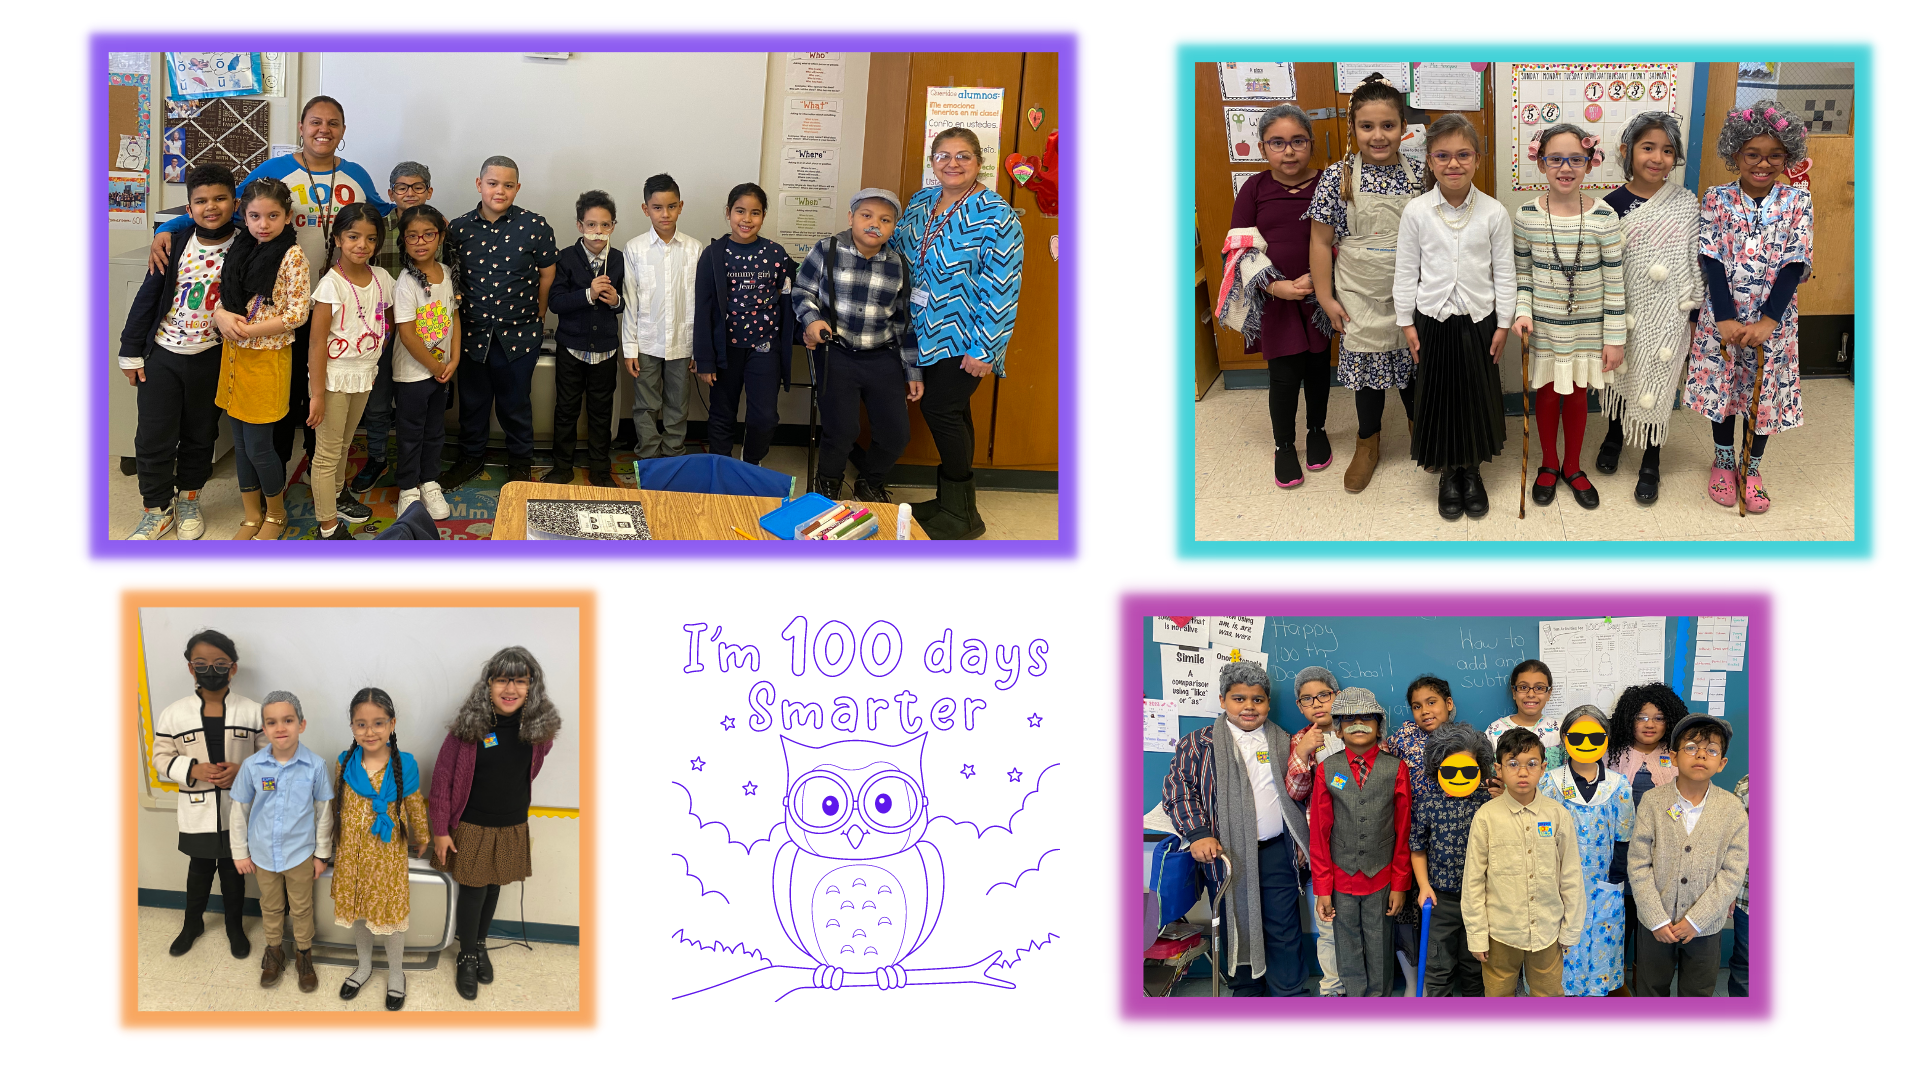 Celebrating 100 days at the Roosevelt School